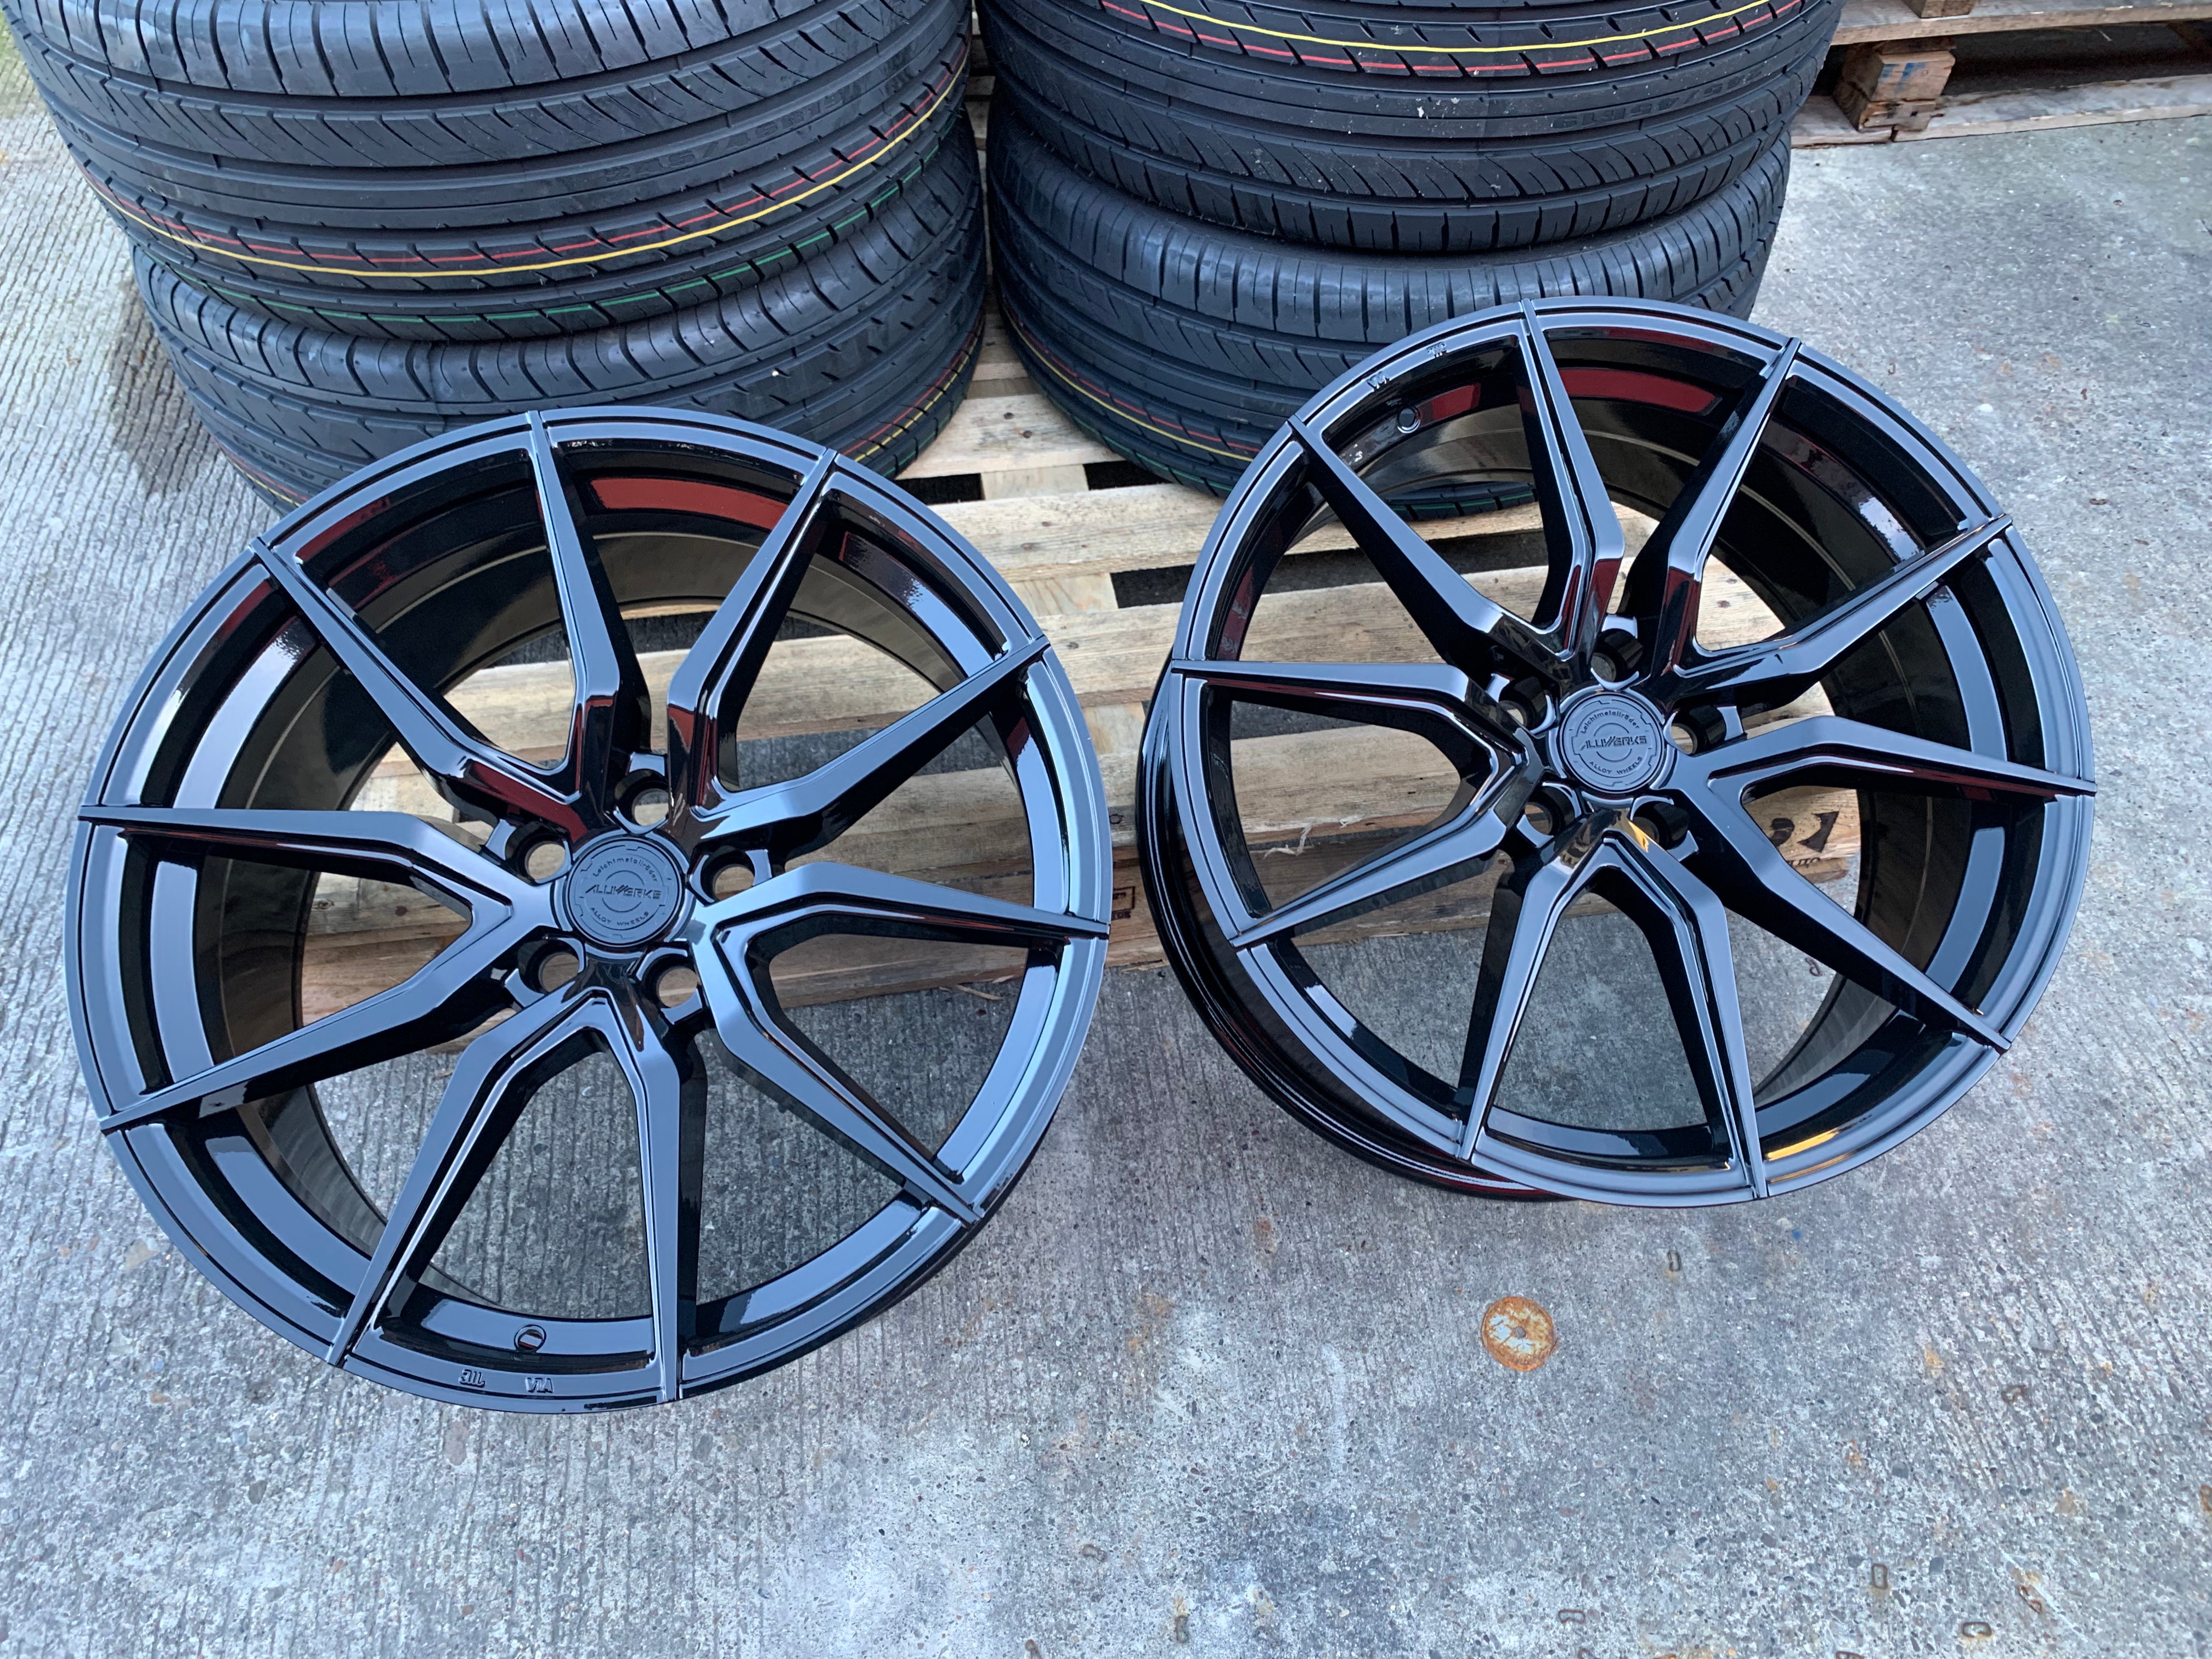 20" Aluwerks Spyder wheels Gloss Black fits Audi BMW Mercedes VW Ford Vauxhall Amarok